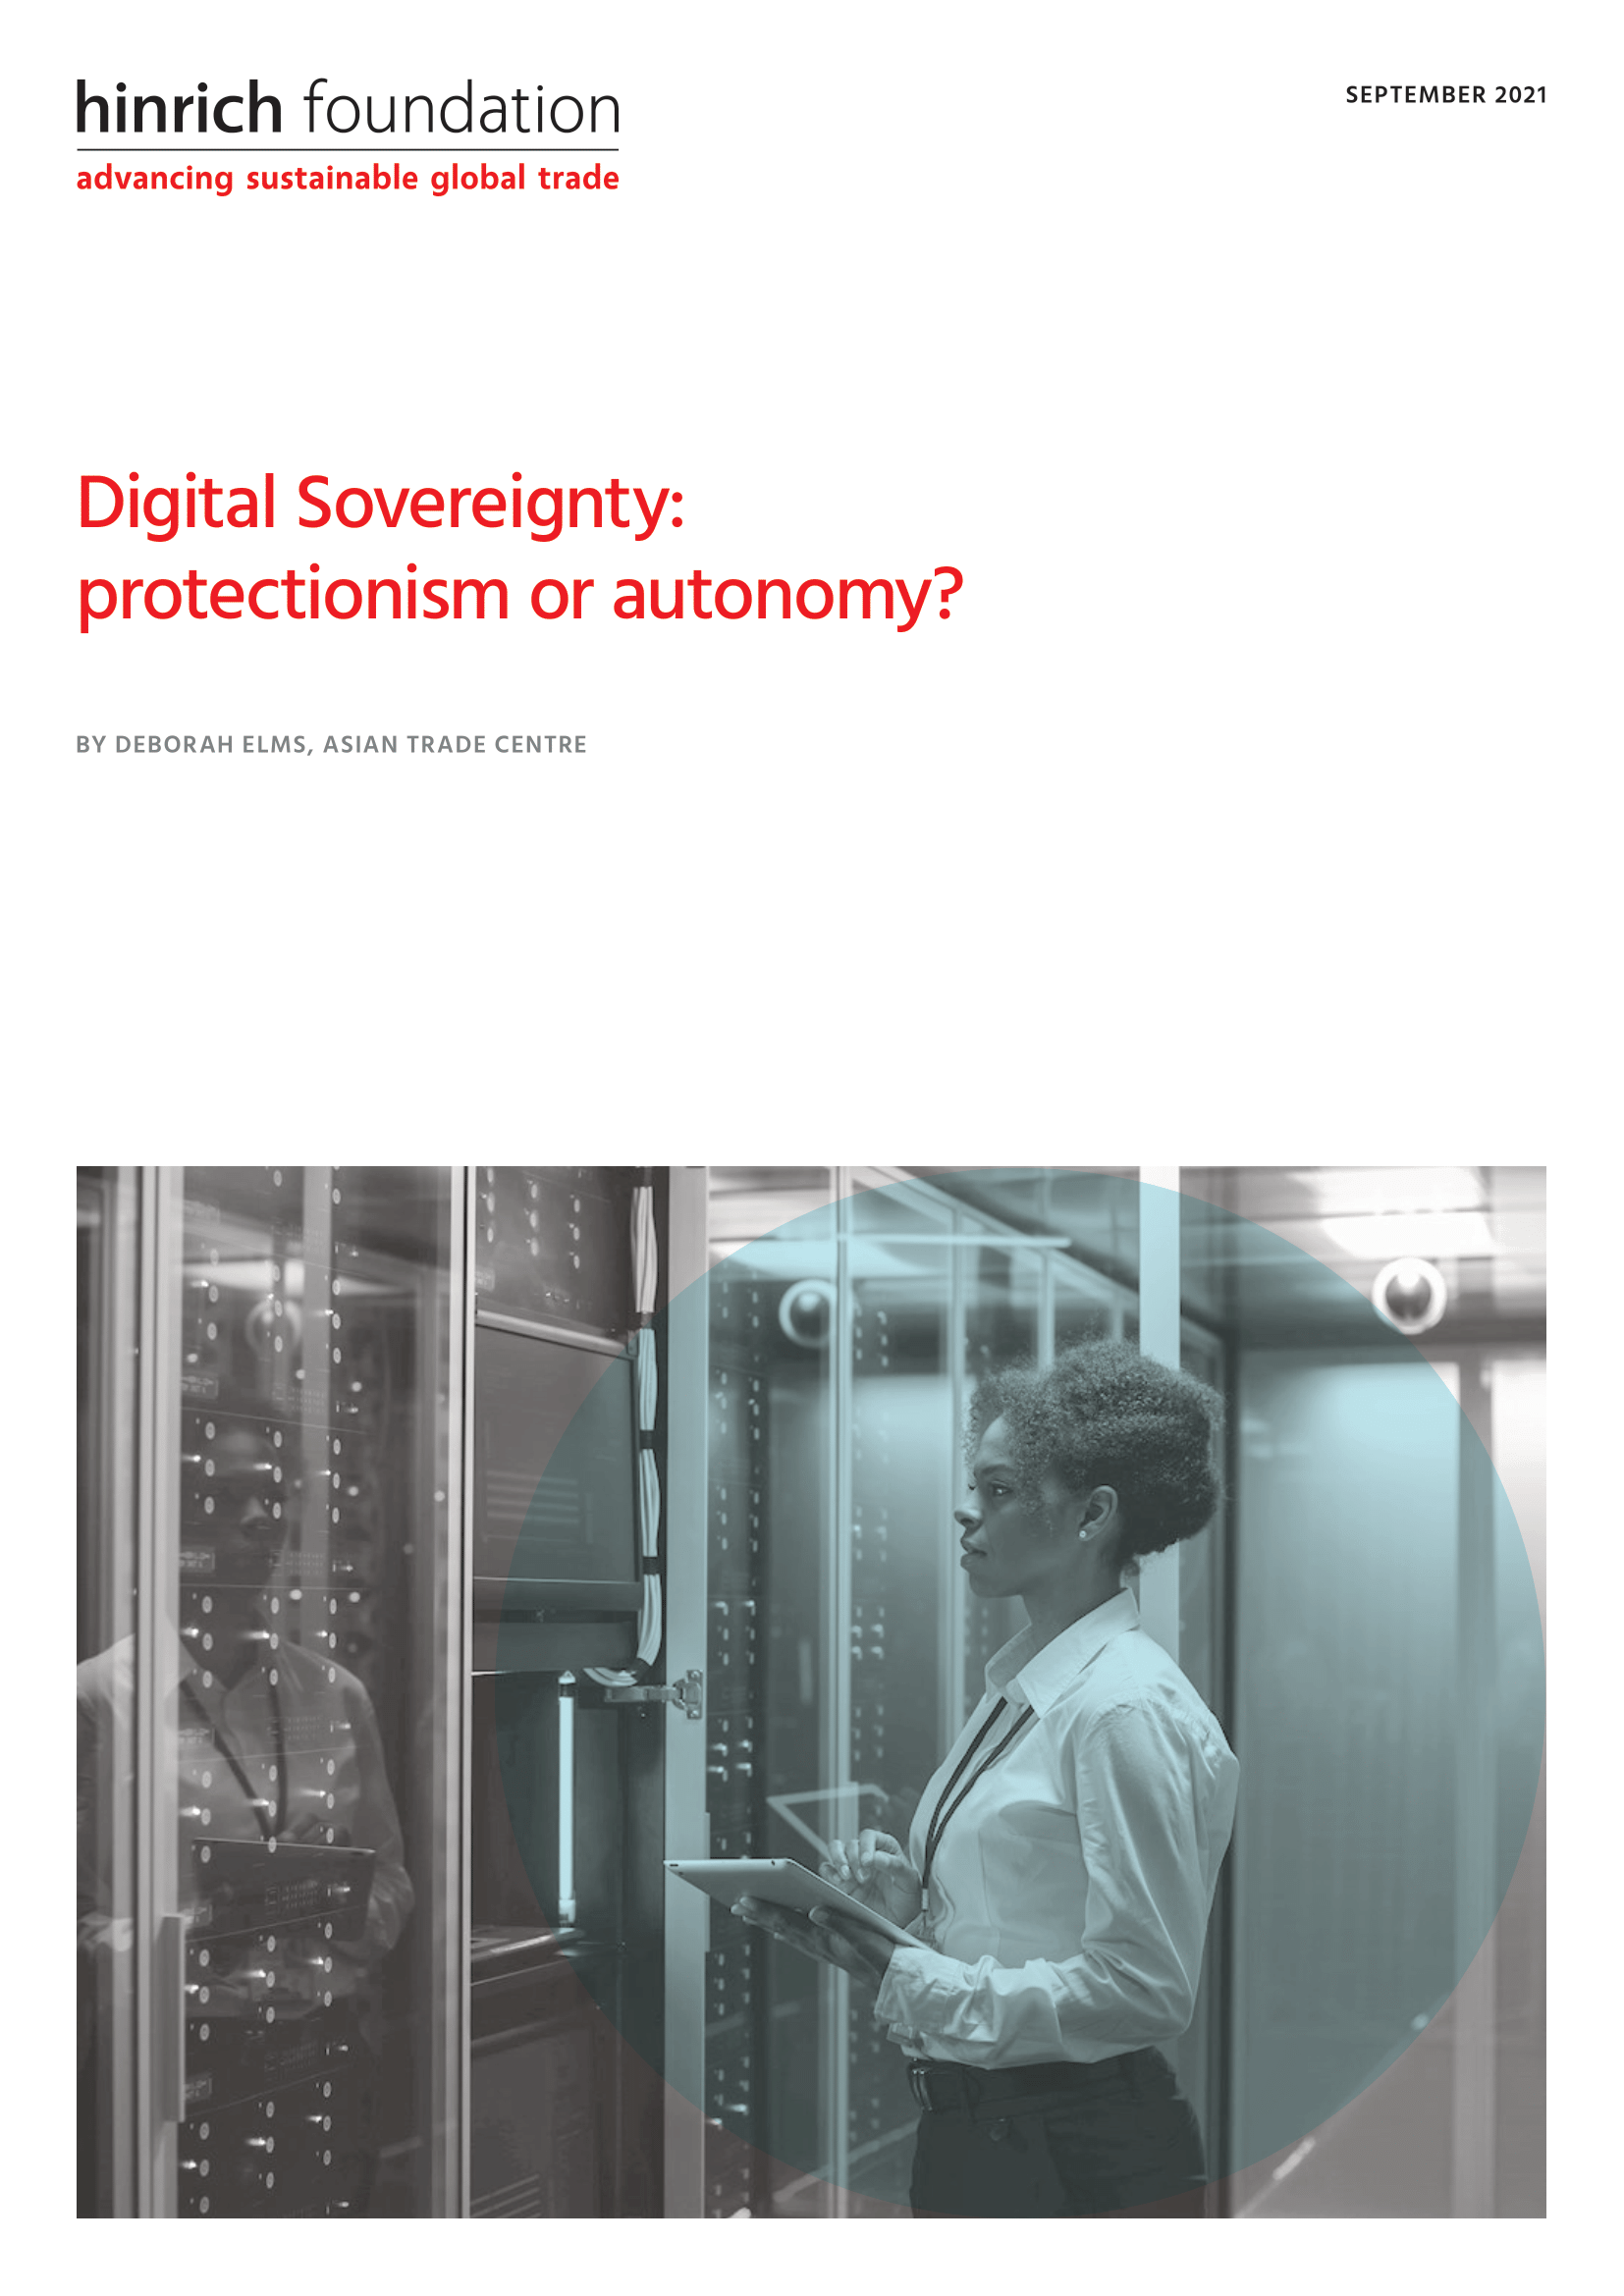 Digital+sovereignty+protectionism+or+autonomy+-+Hinrich+Foundation+-+Deborah+Elms+-+September+2021-01.png